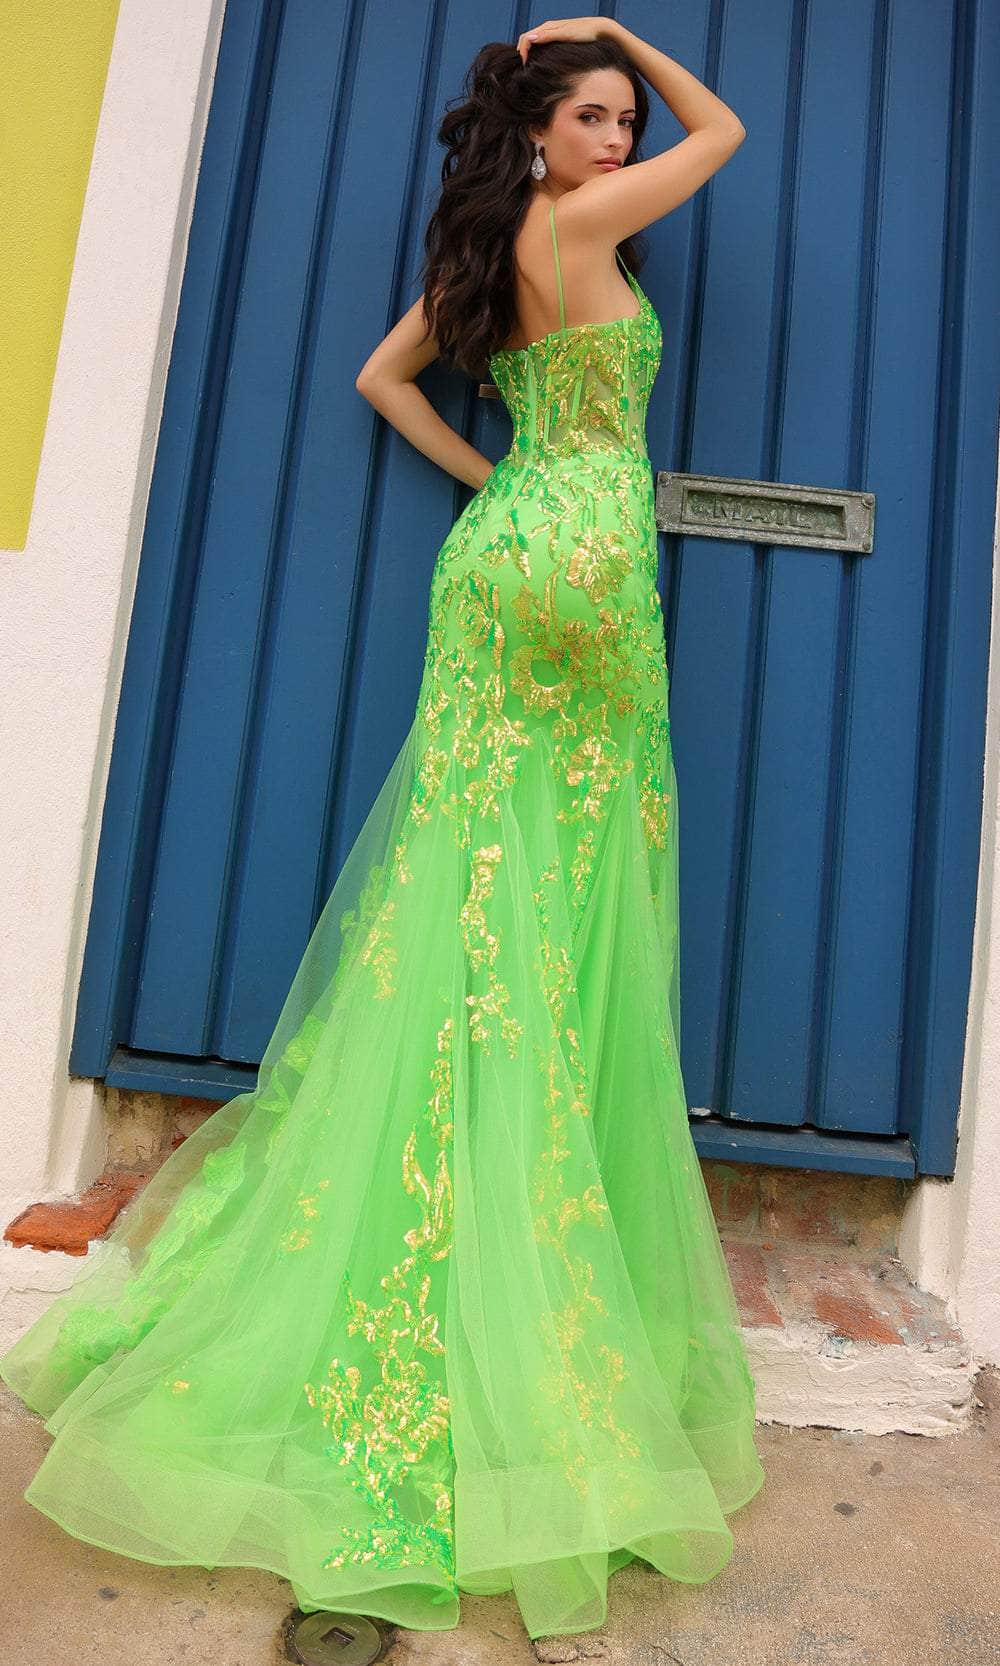 Nox Anabel Q1390 - Vibrant Corset Prom Dress Special Occasion Dresses 